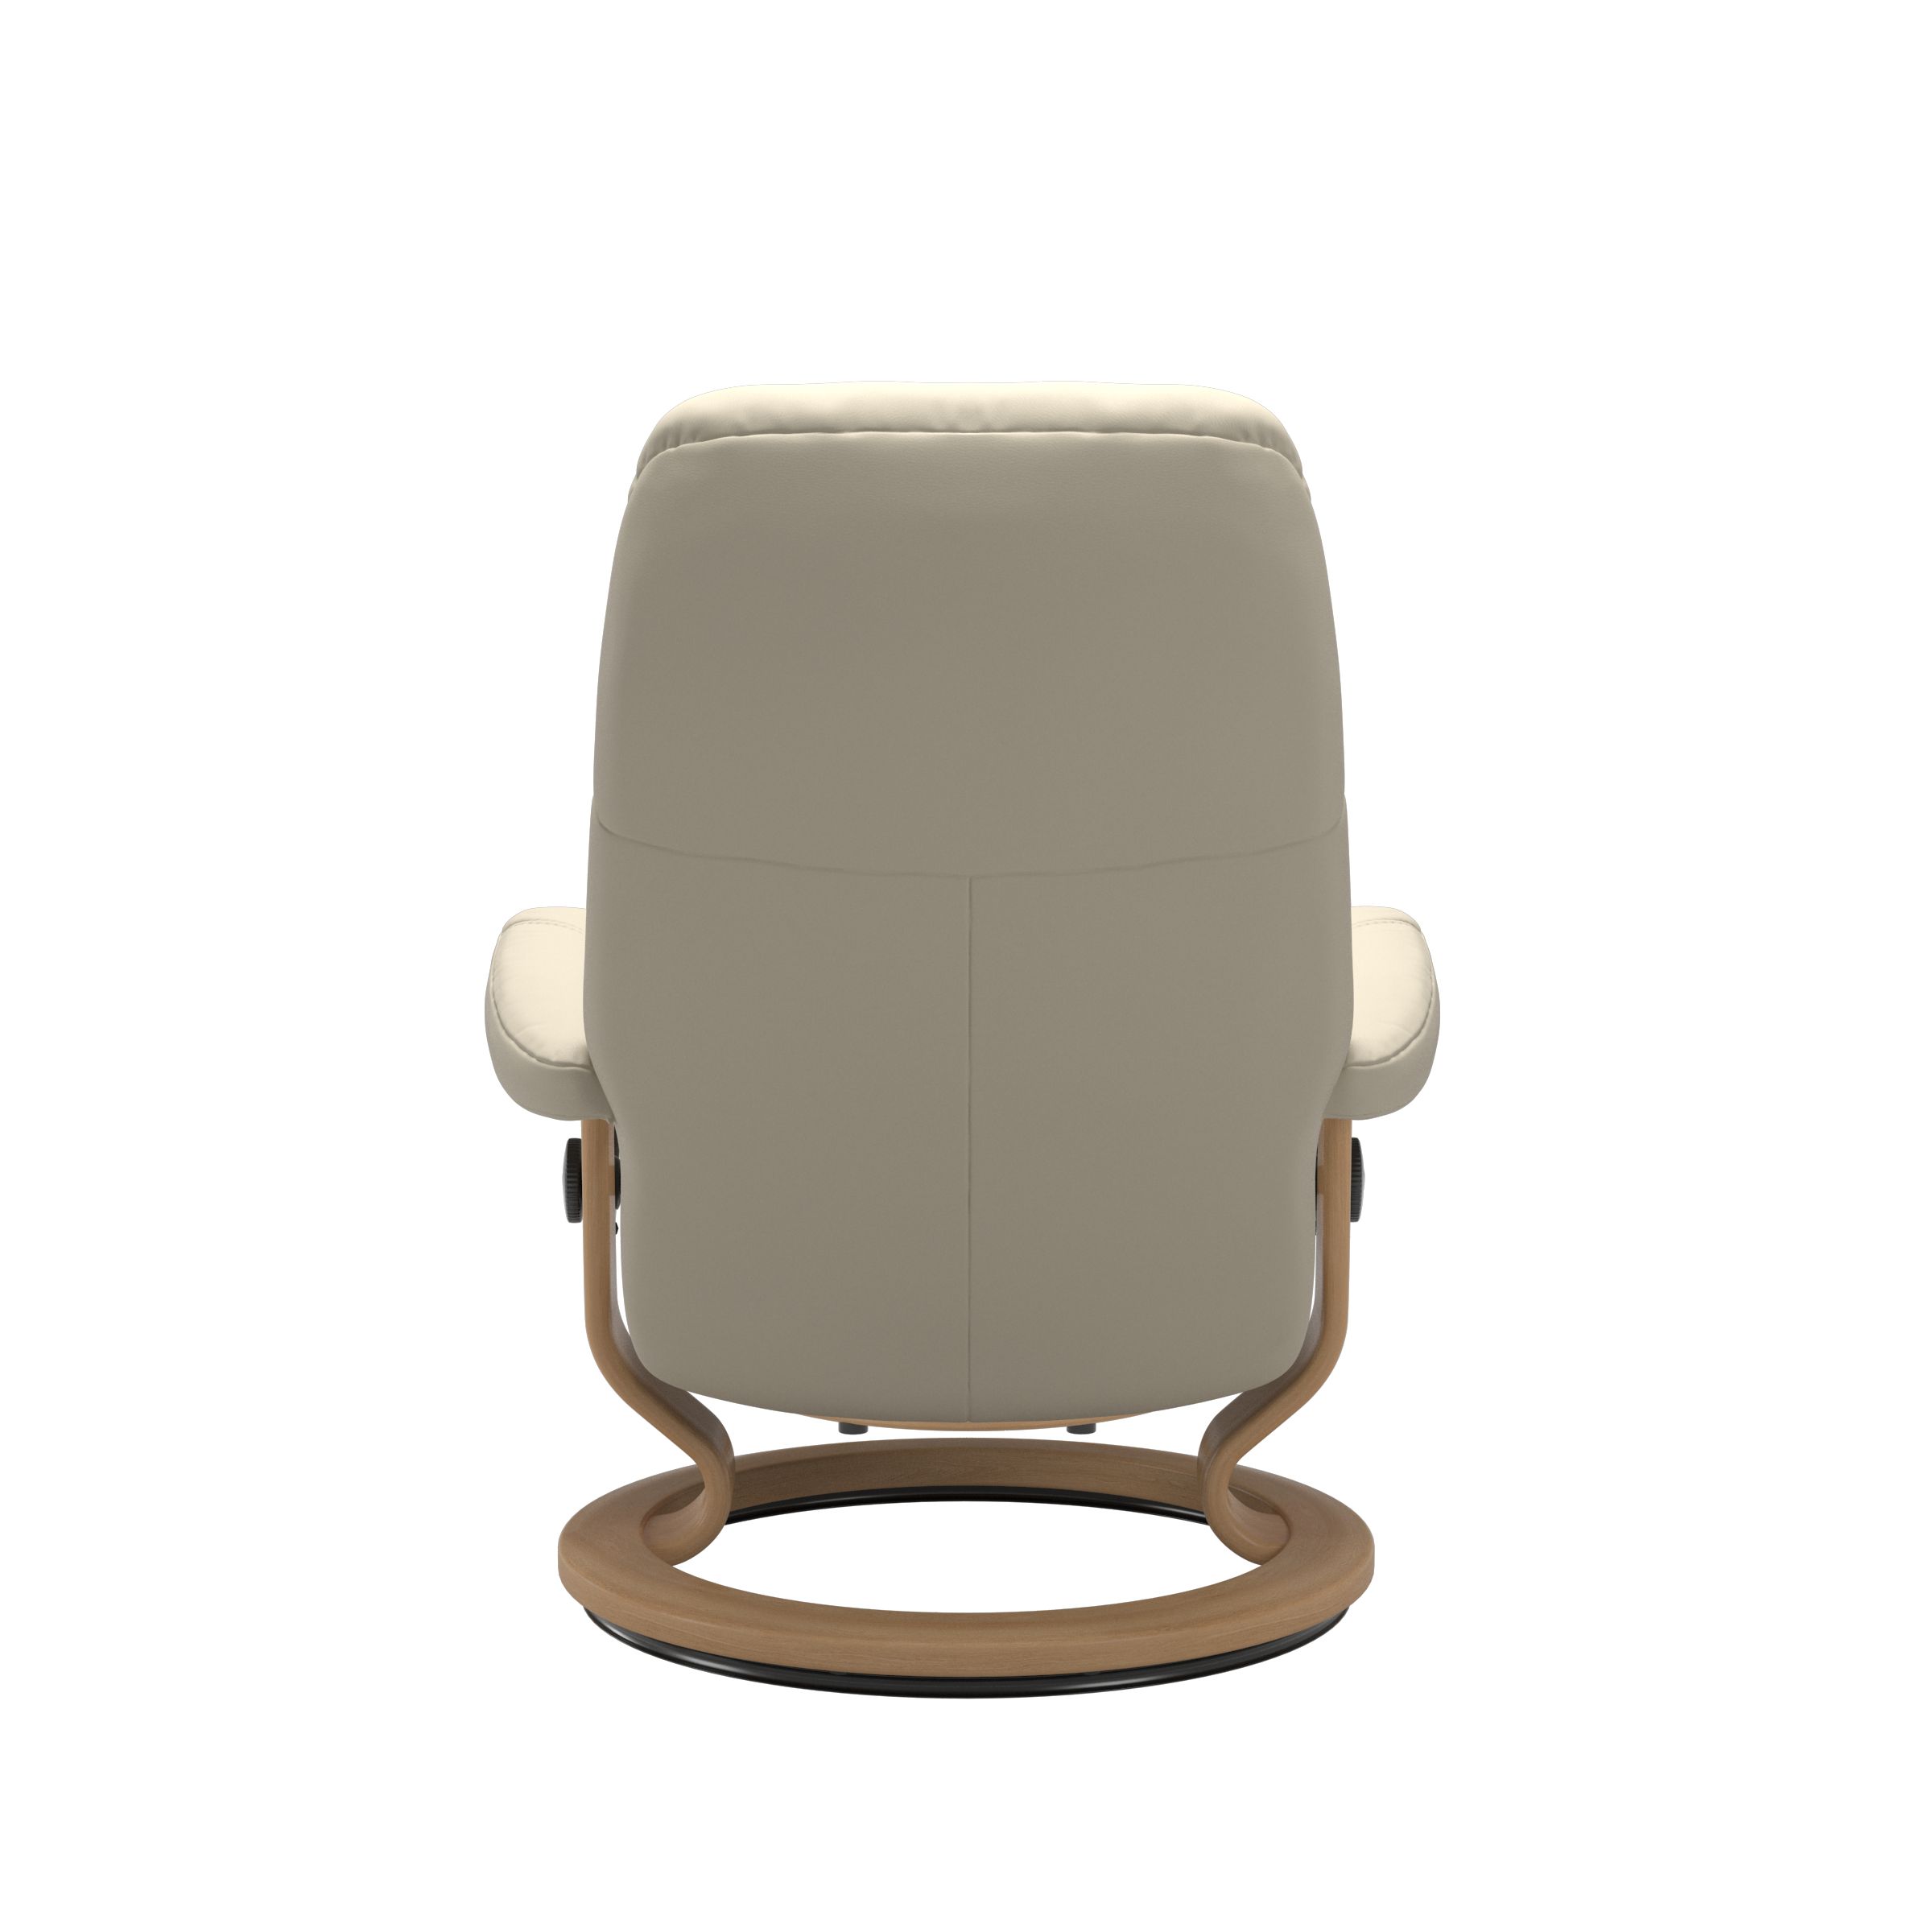 Stressless Consul Cream Large Recliner Chair